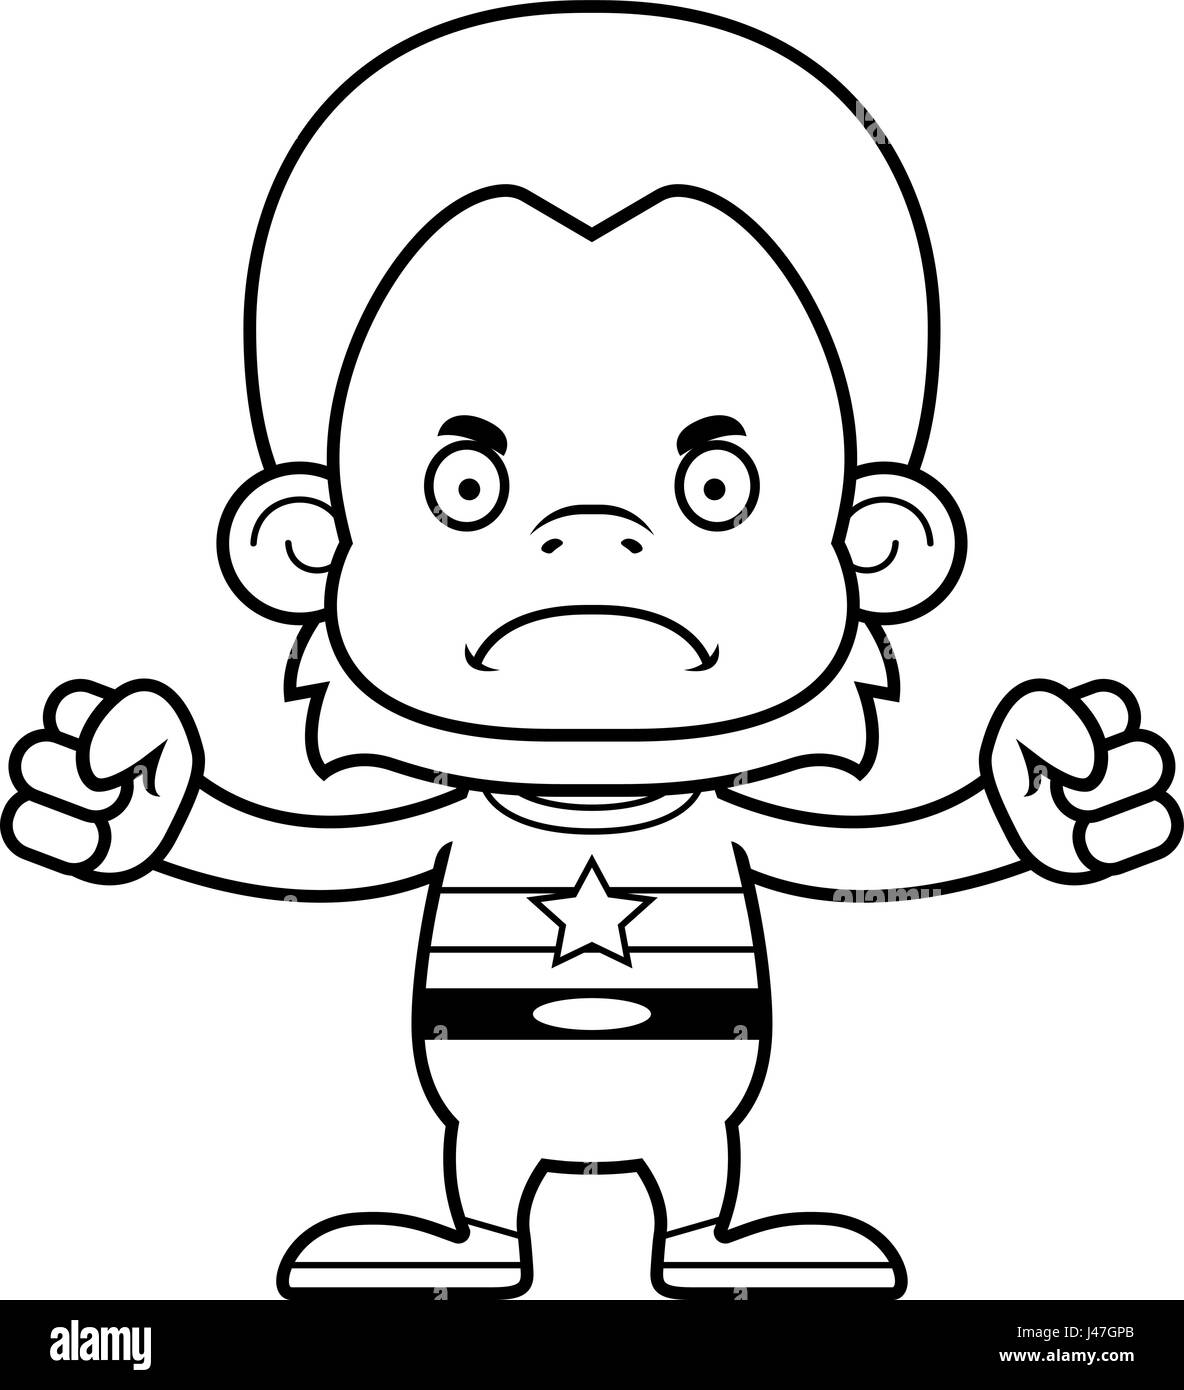 Un cartoon superhero orangutan cercando arrabbiato. Illustrazione Vettoriale